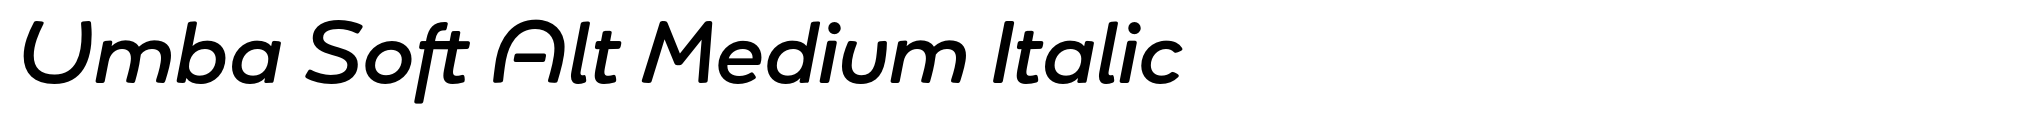 Umba Soft Alt Medium Italic image